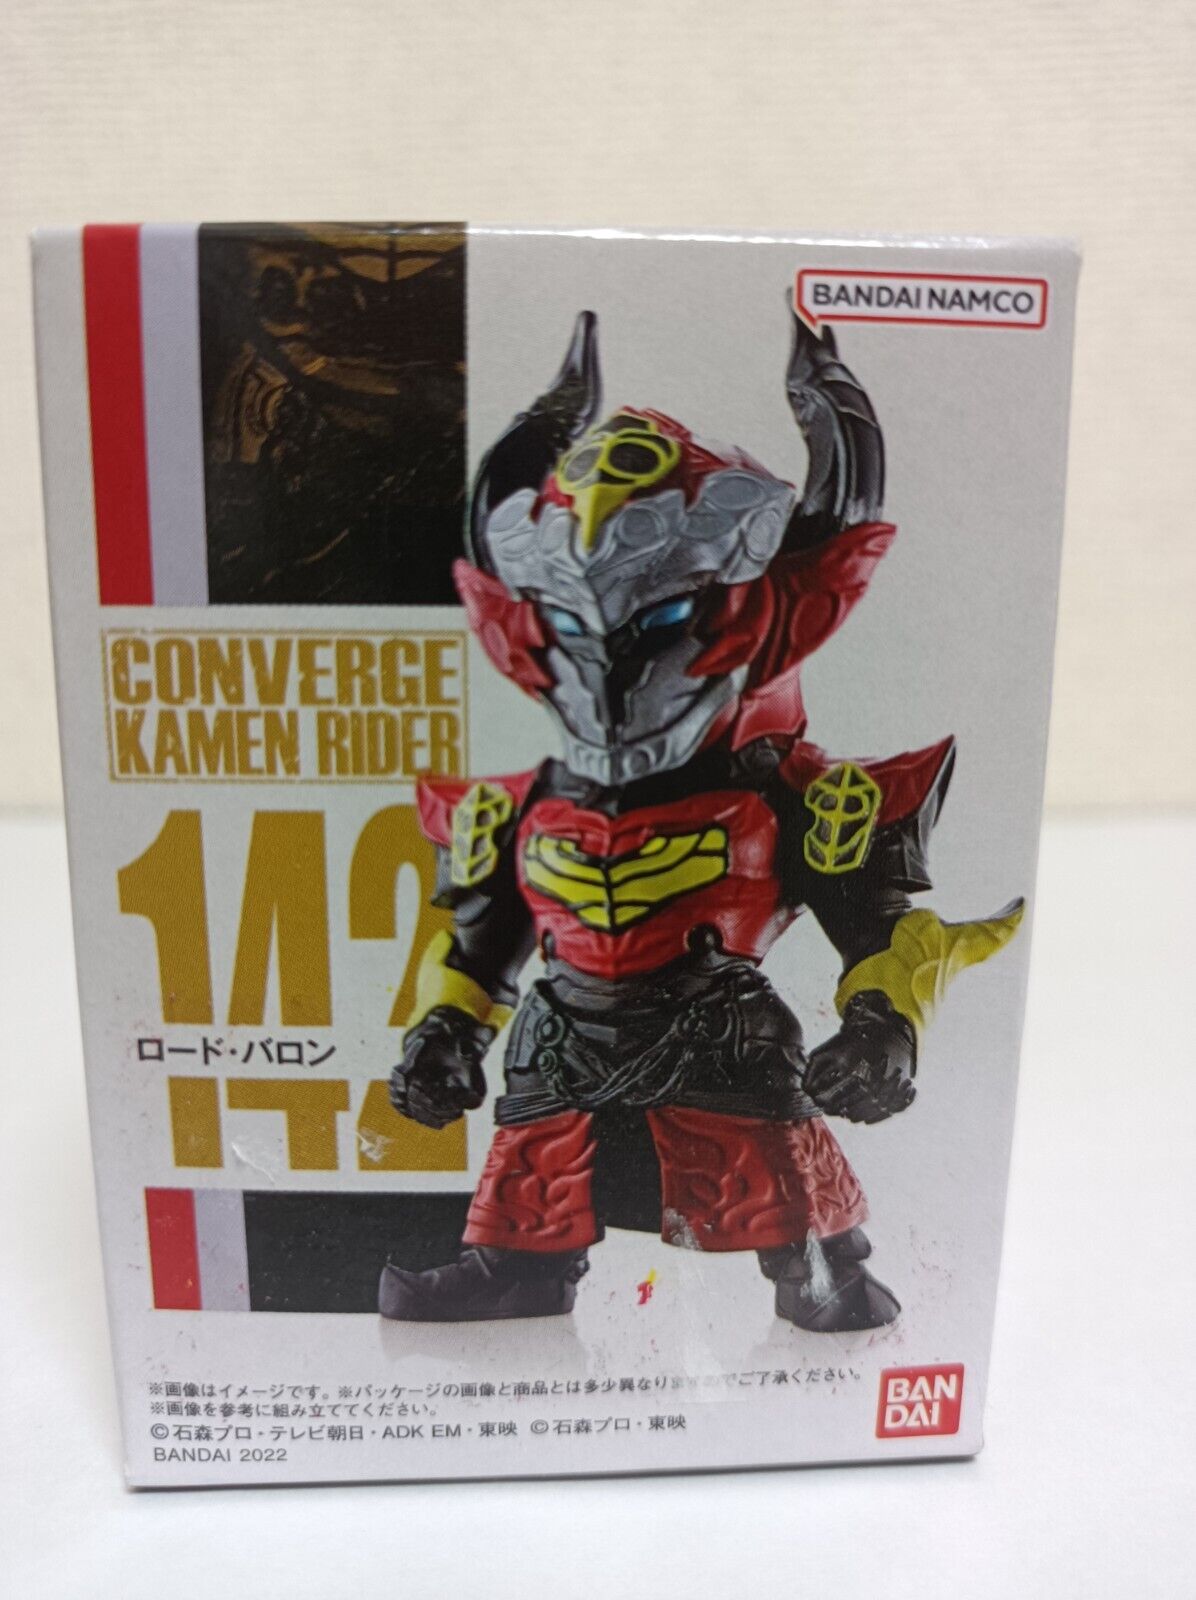 Kamen Rider converge series No.142 -- Lord Baron -- figure